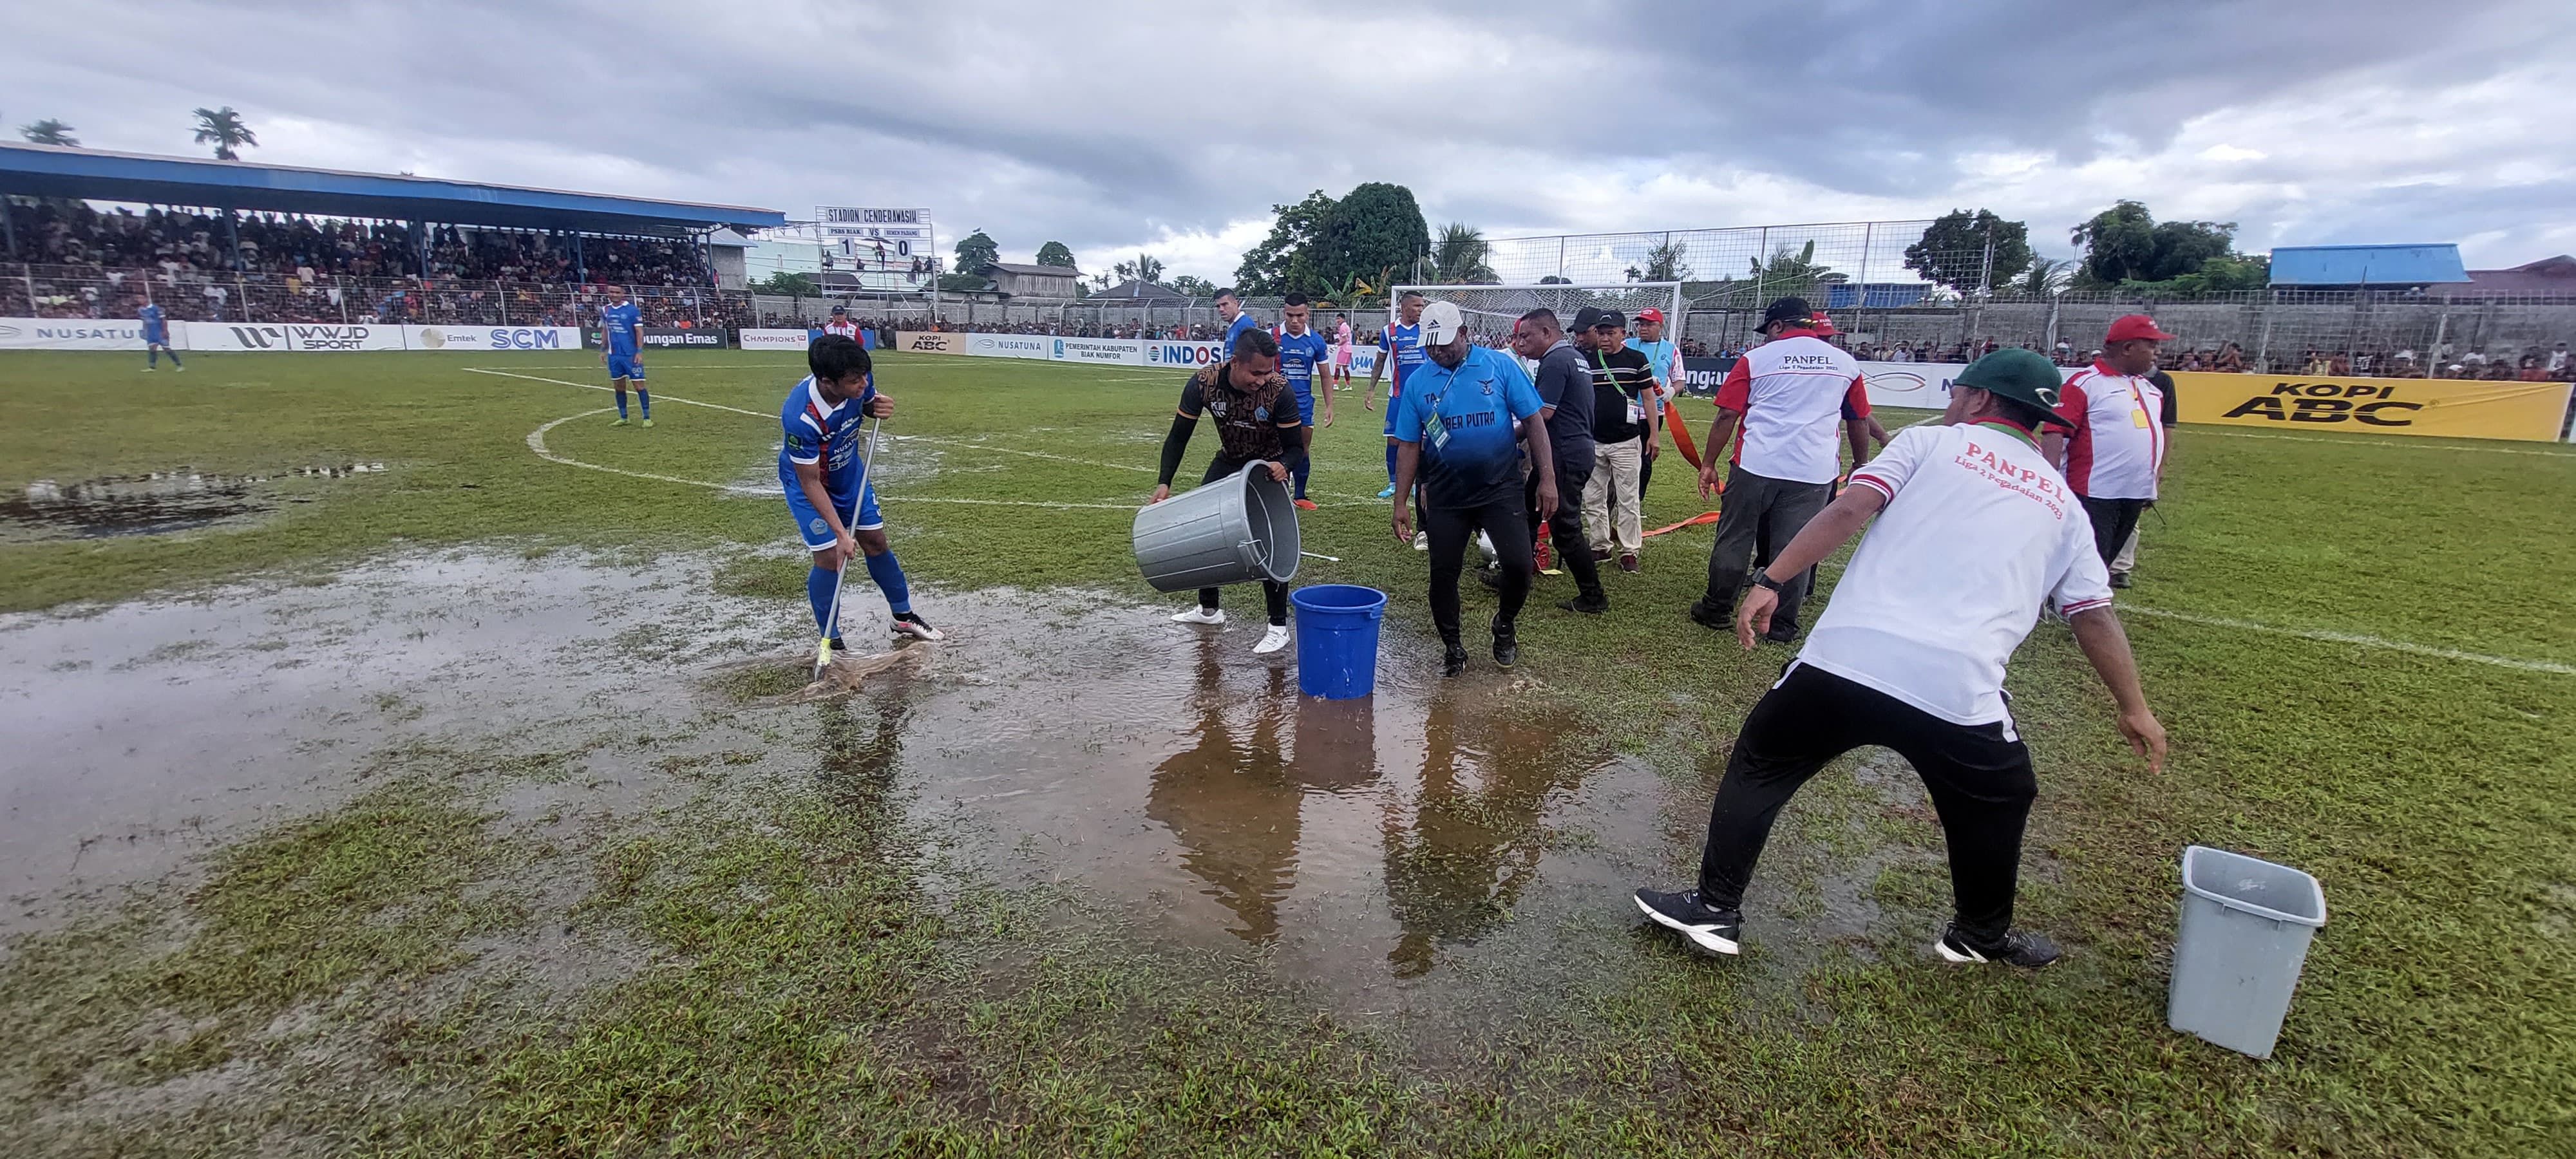 Panpel bersama pemain ketika saling membantu menguras genangan air di  sepanjang badan lapangan akibat hujan deras melanda Stadion Cenderawasih, Biak Numfor, Papua 